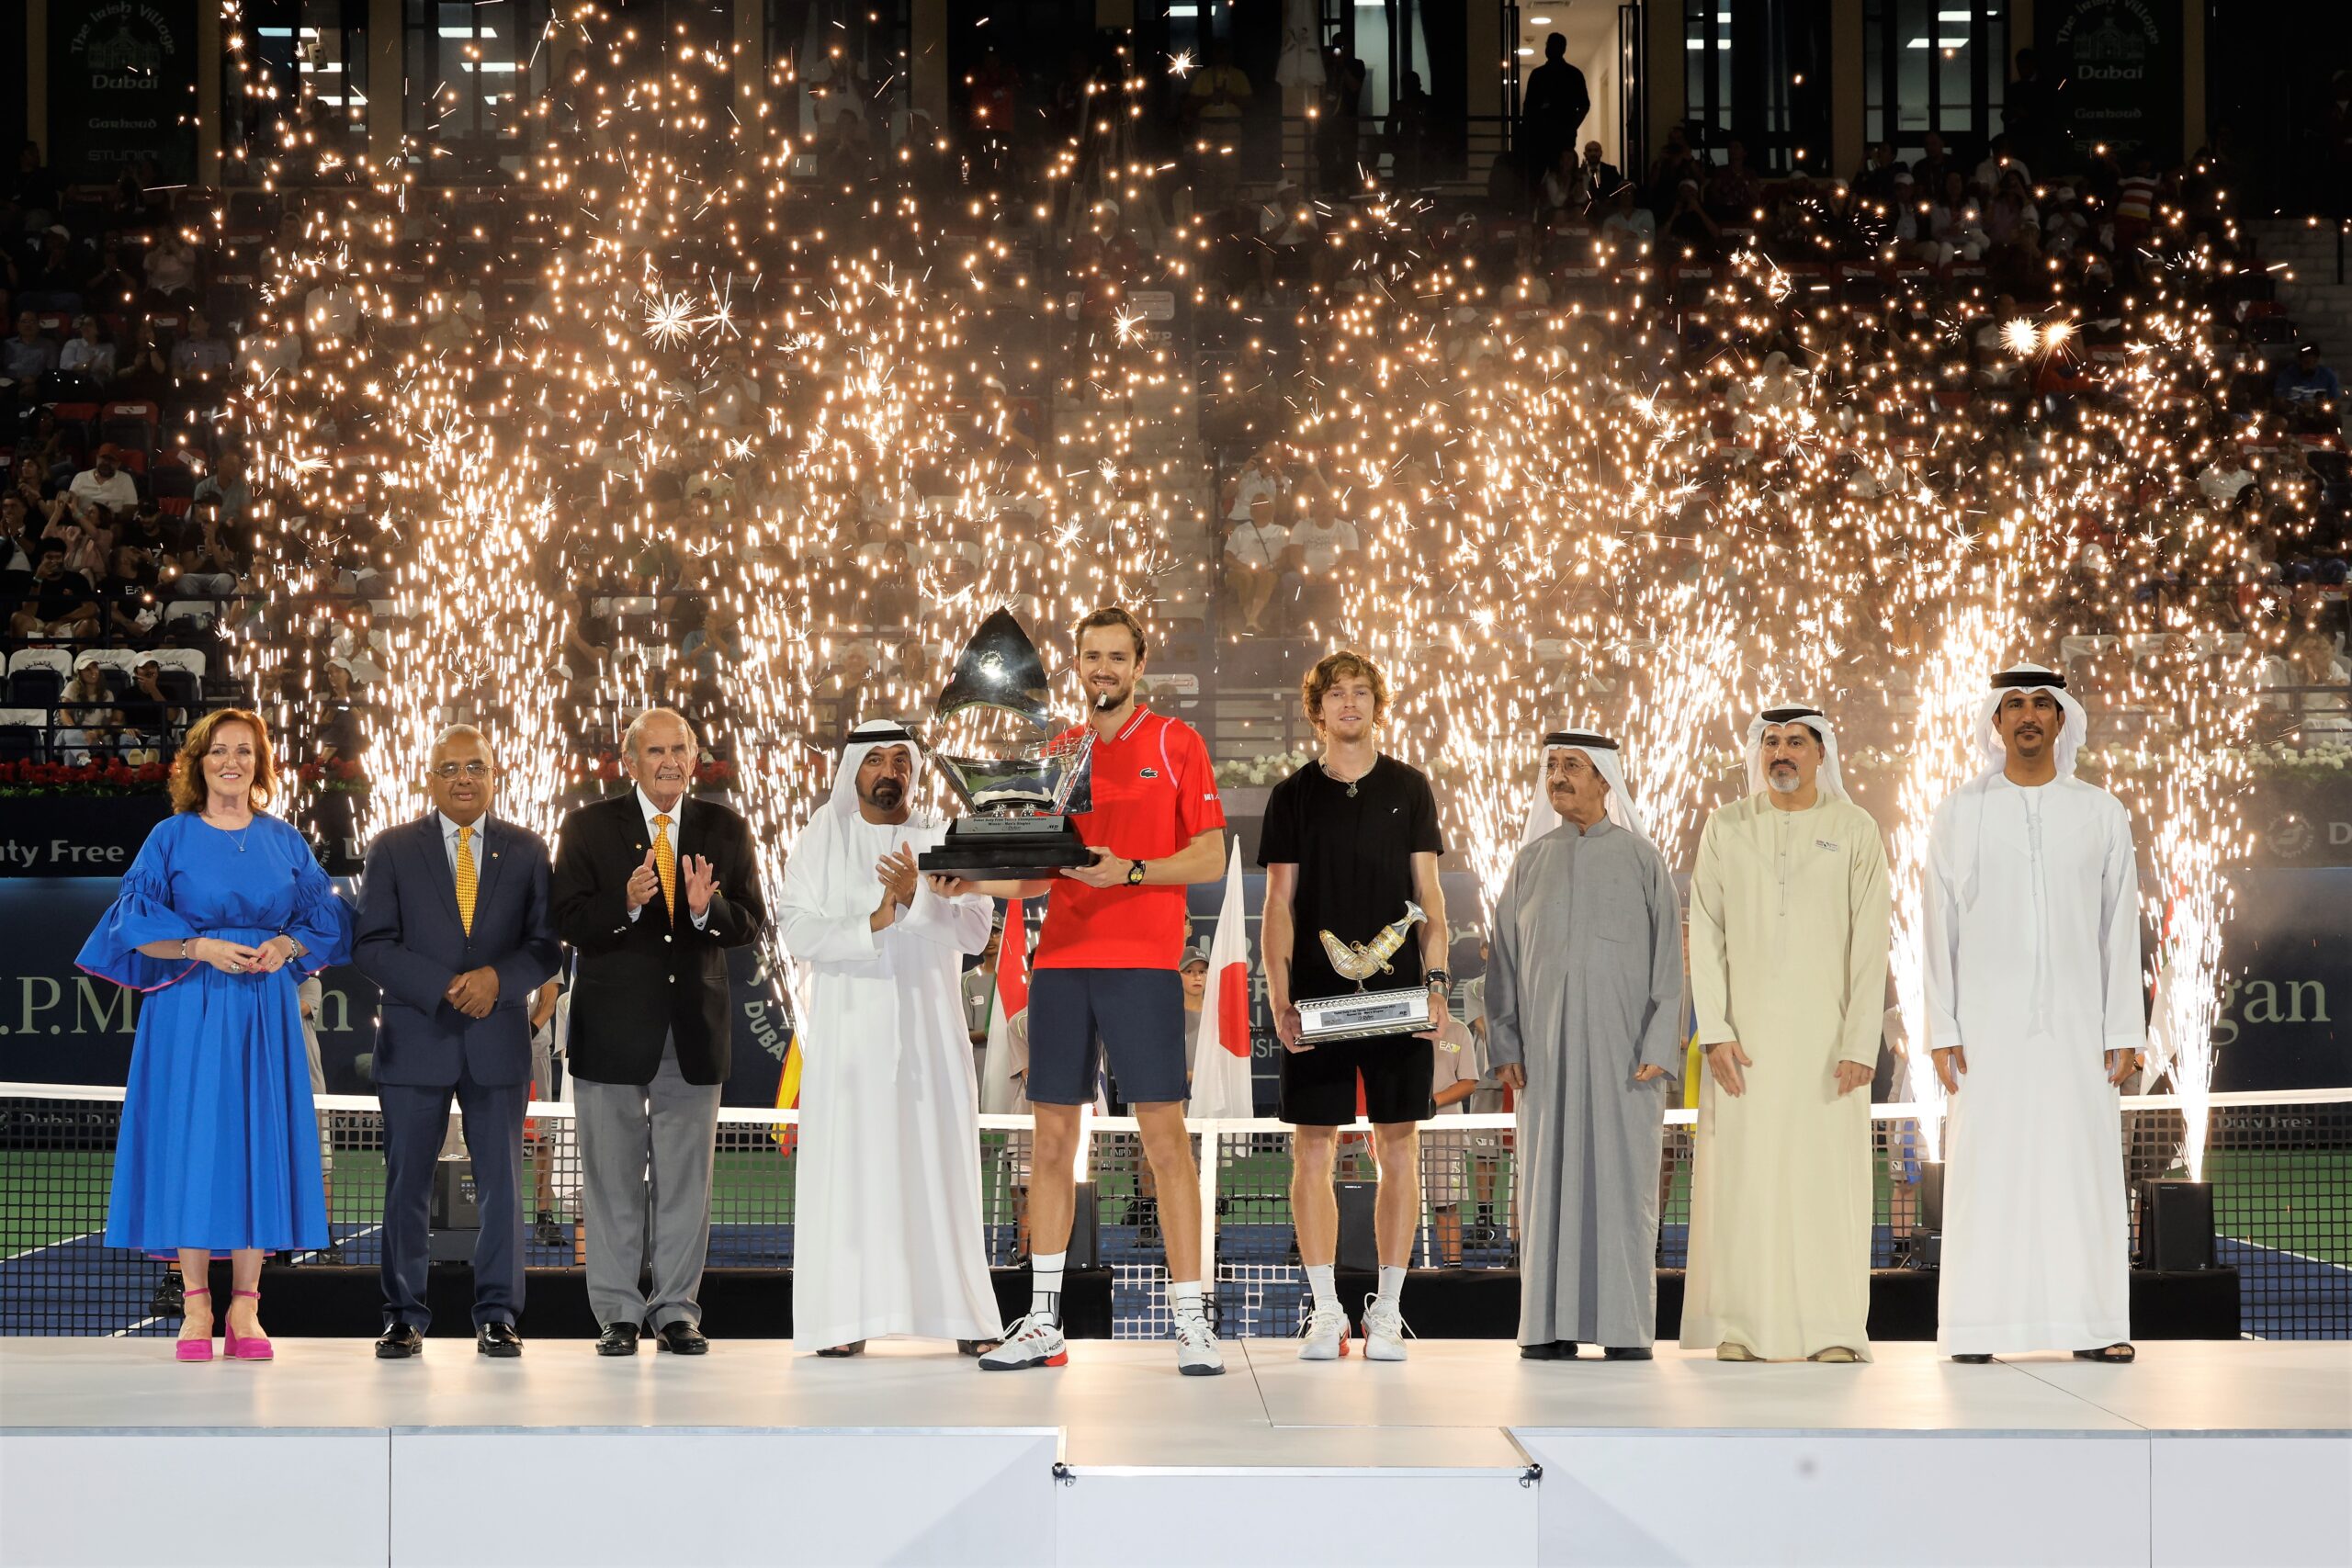 Dubai Championships: Medvedev tops Rublev in final